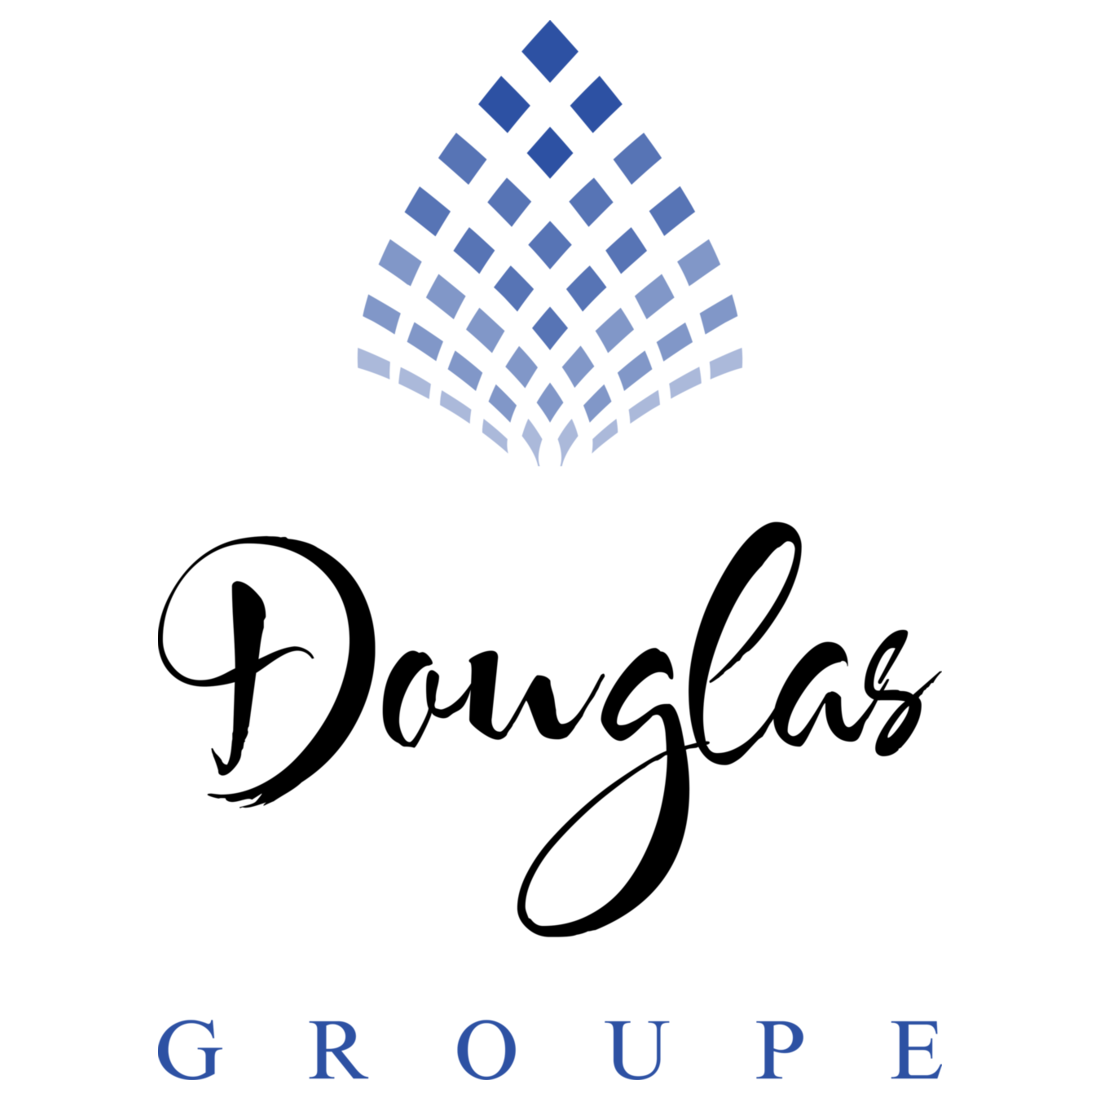 The Douglas Groupe